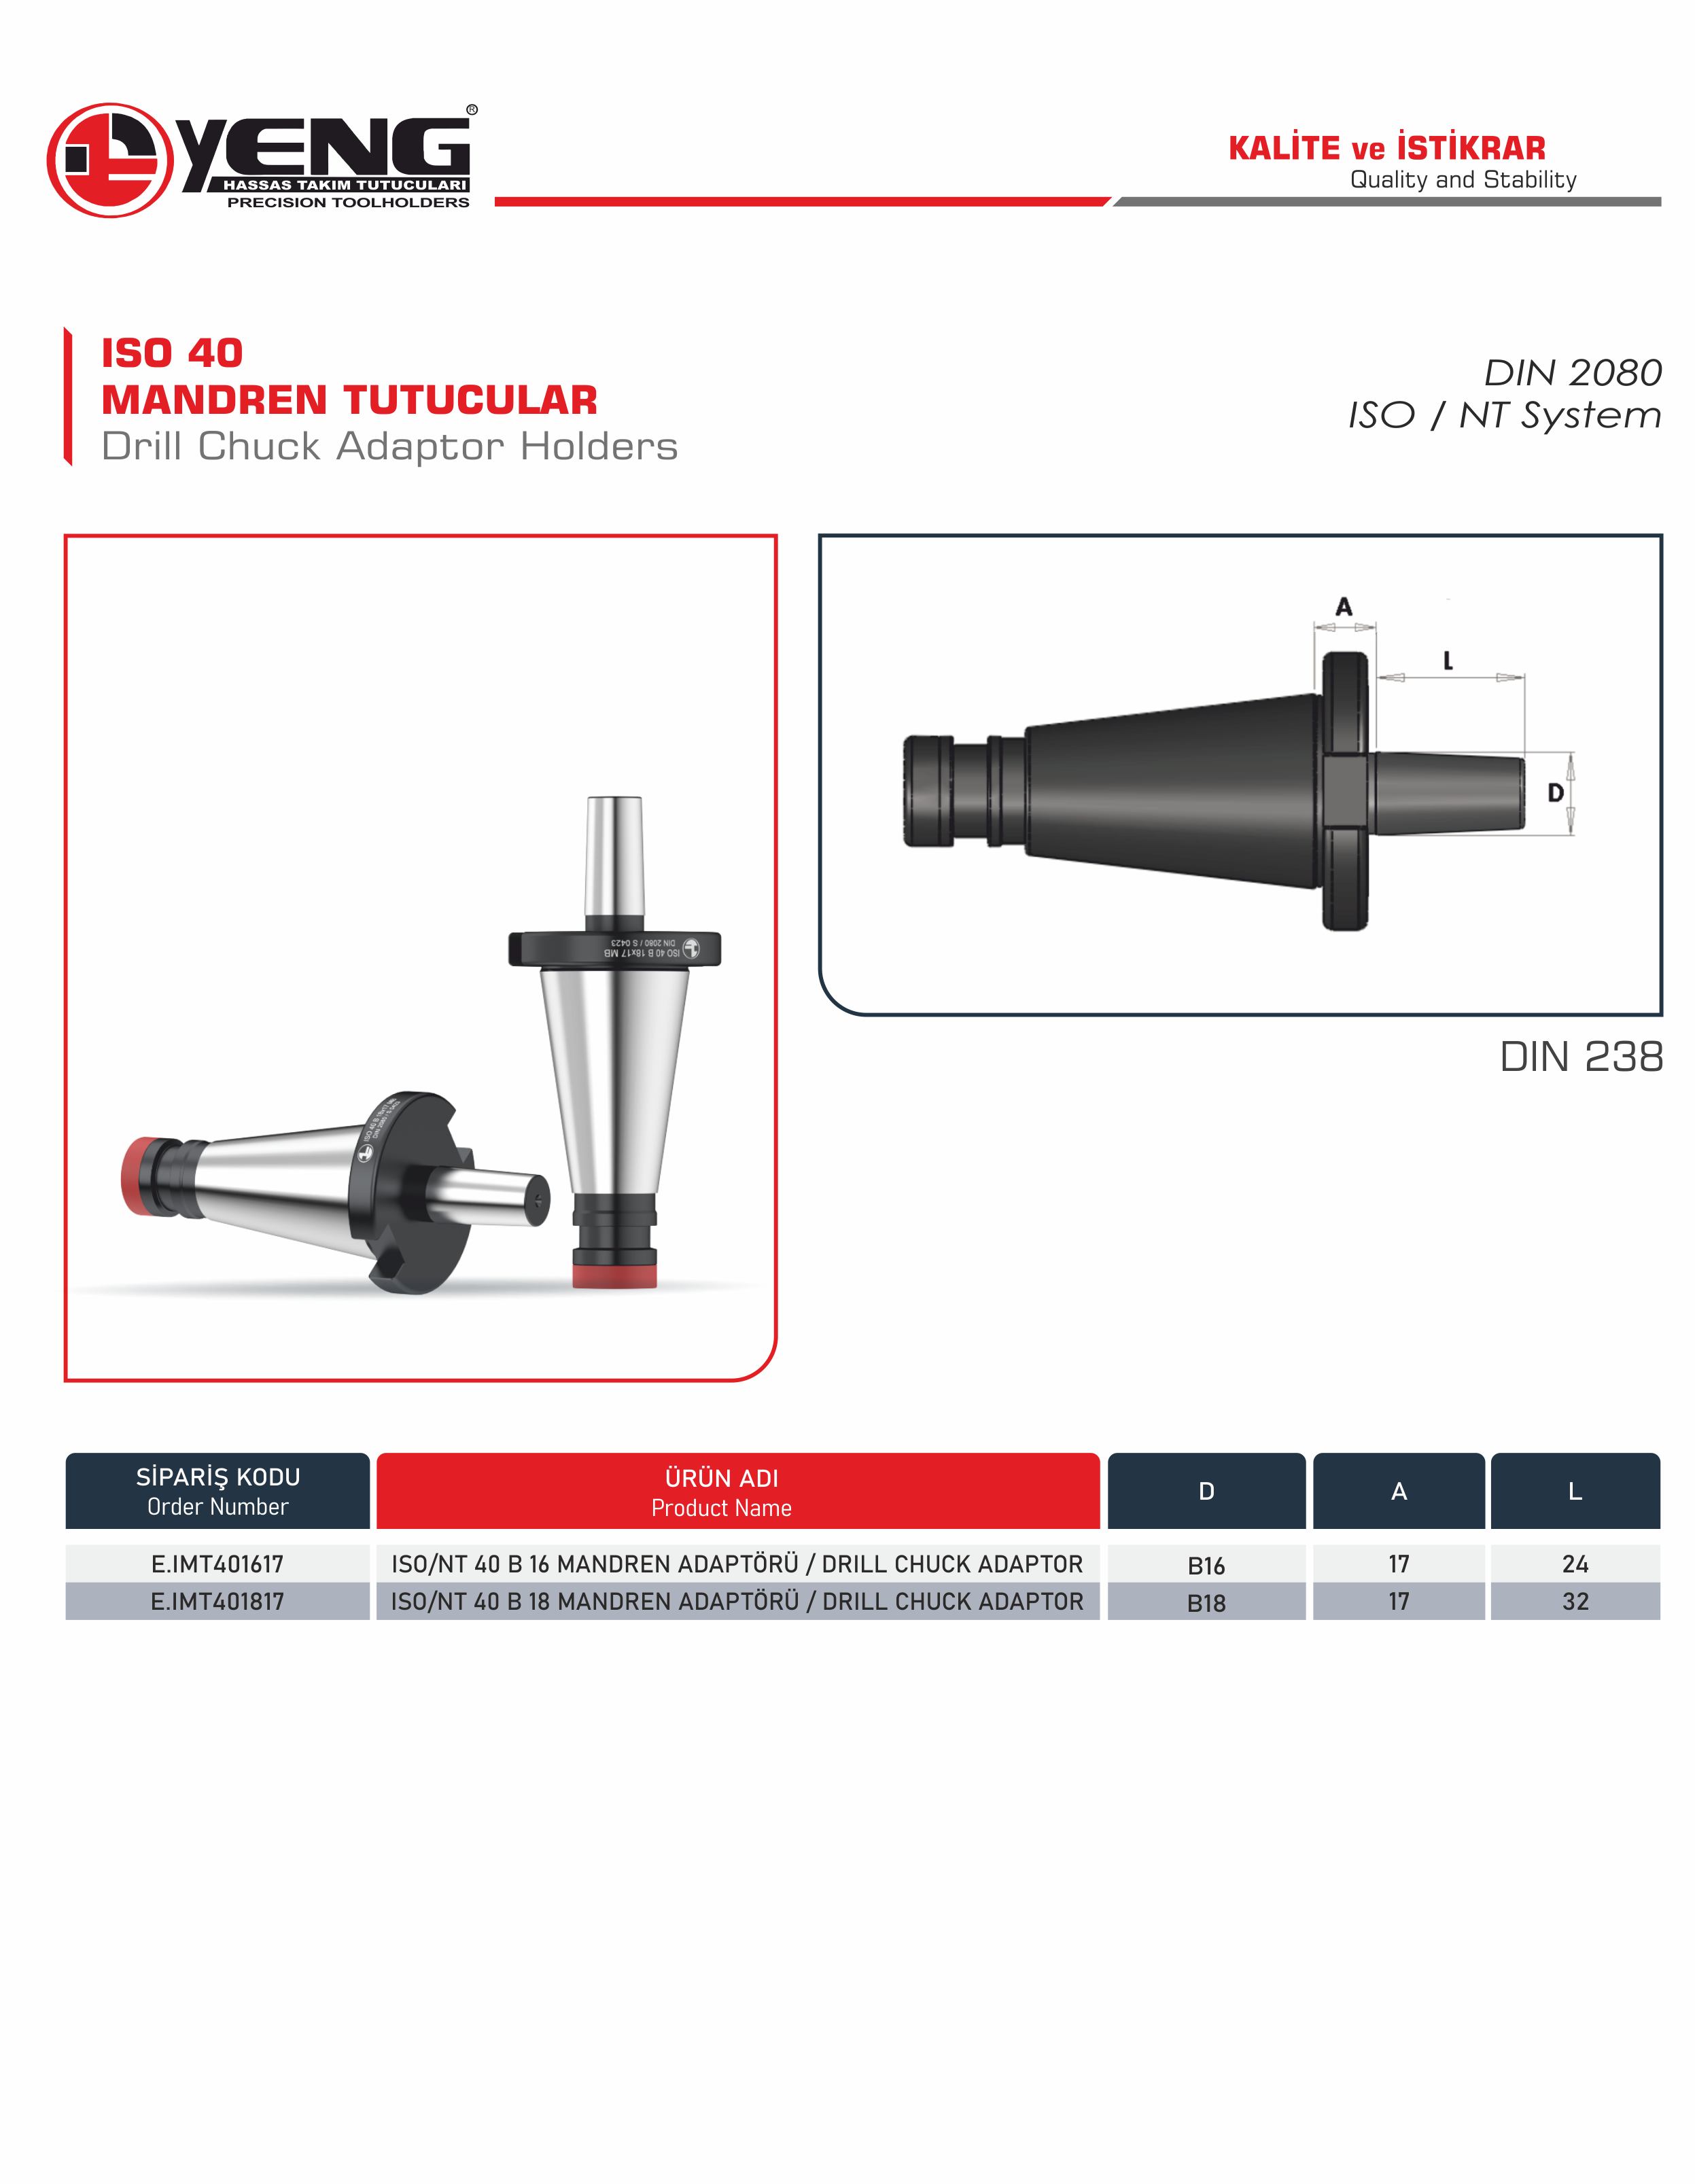 ISO 40 Drill Chuck Adaptor Holders / DIN 238